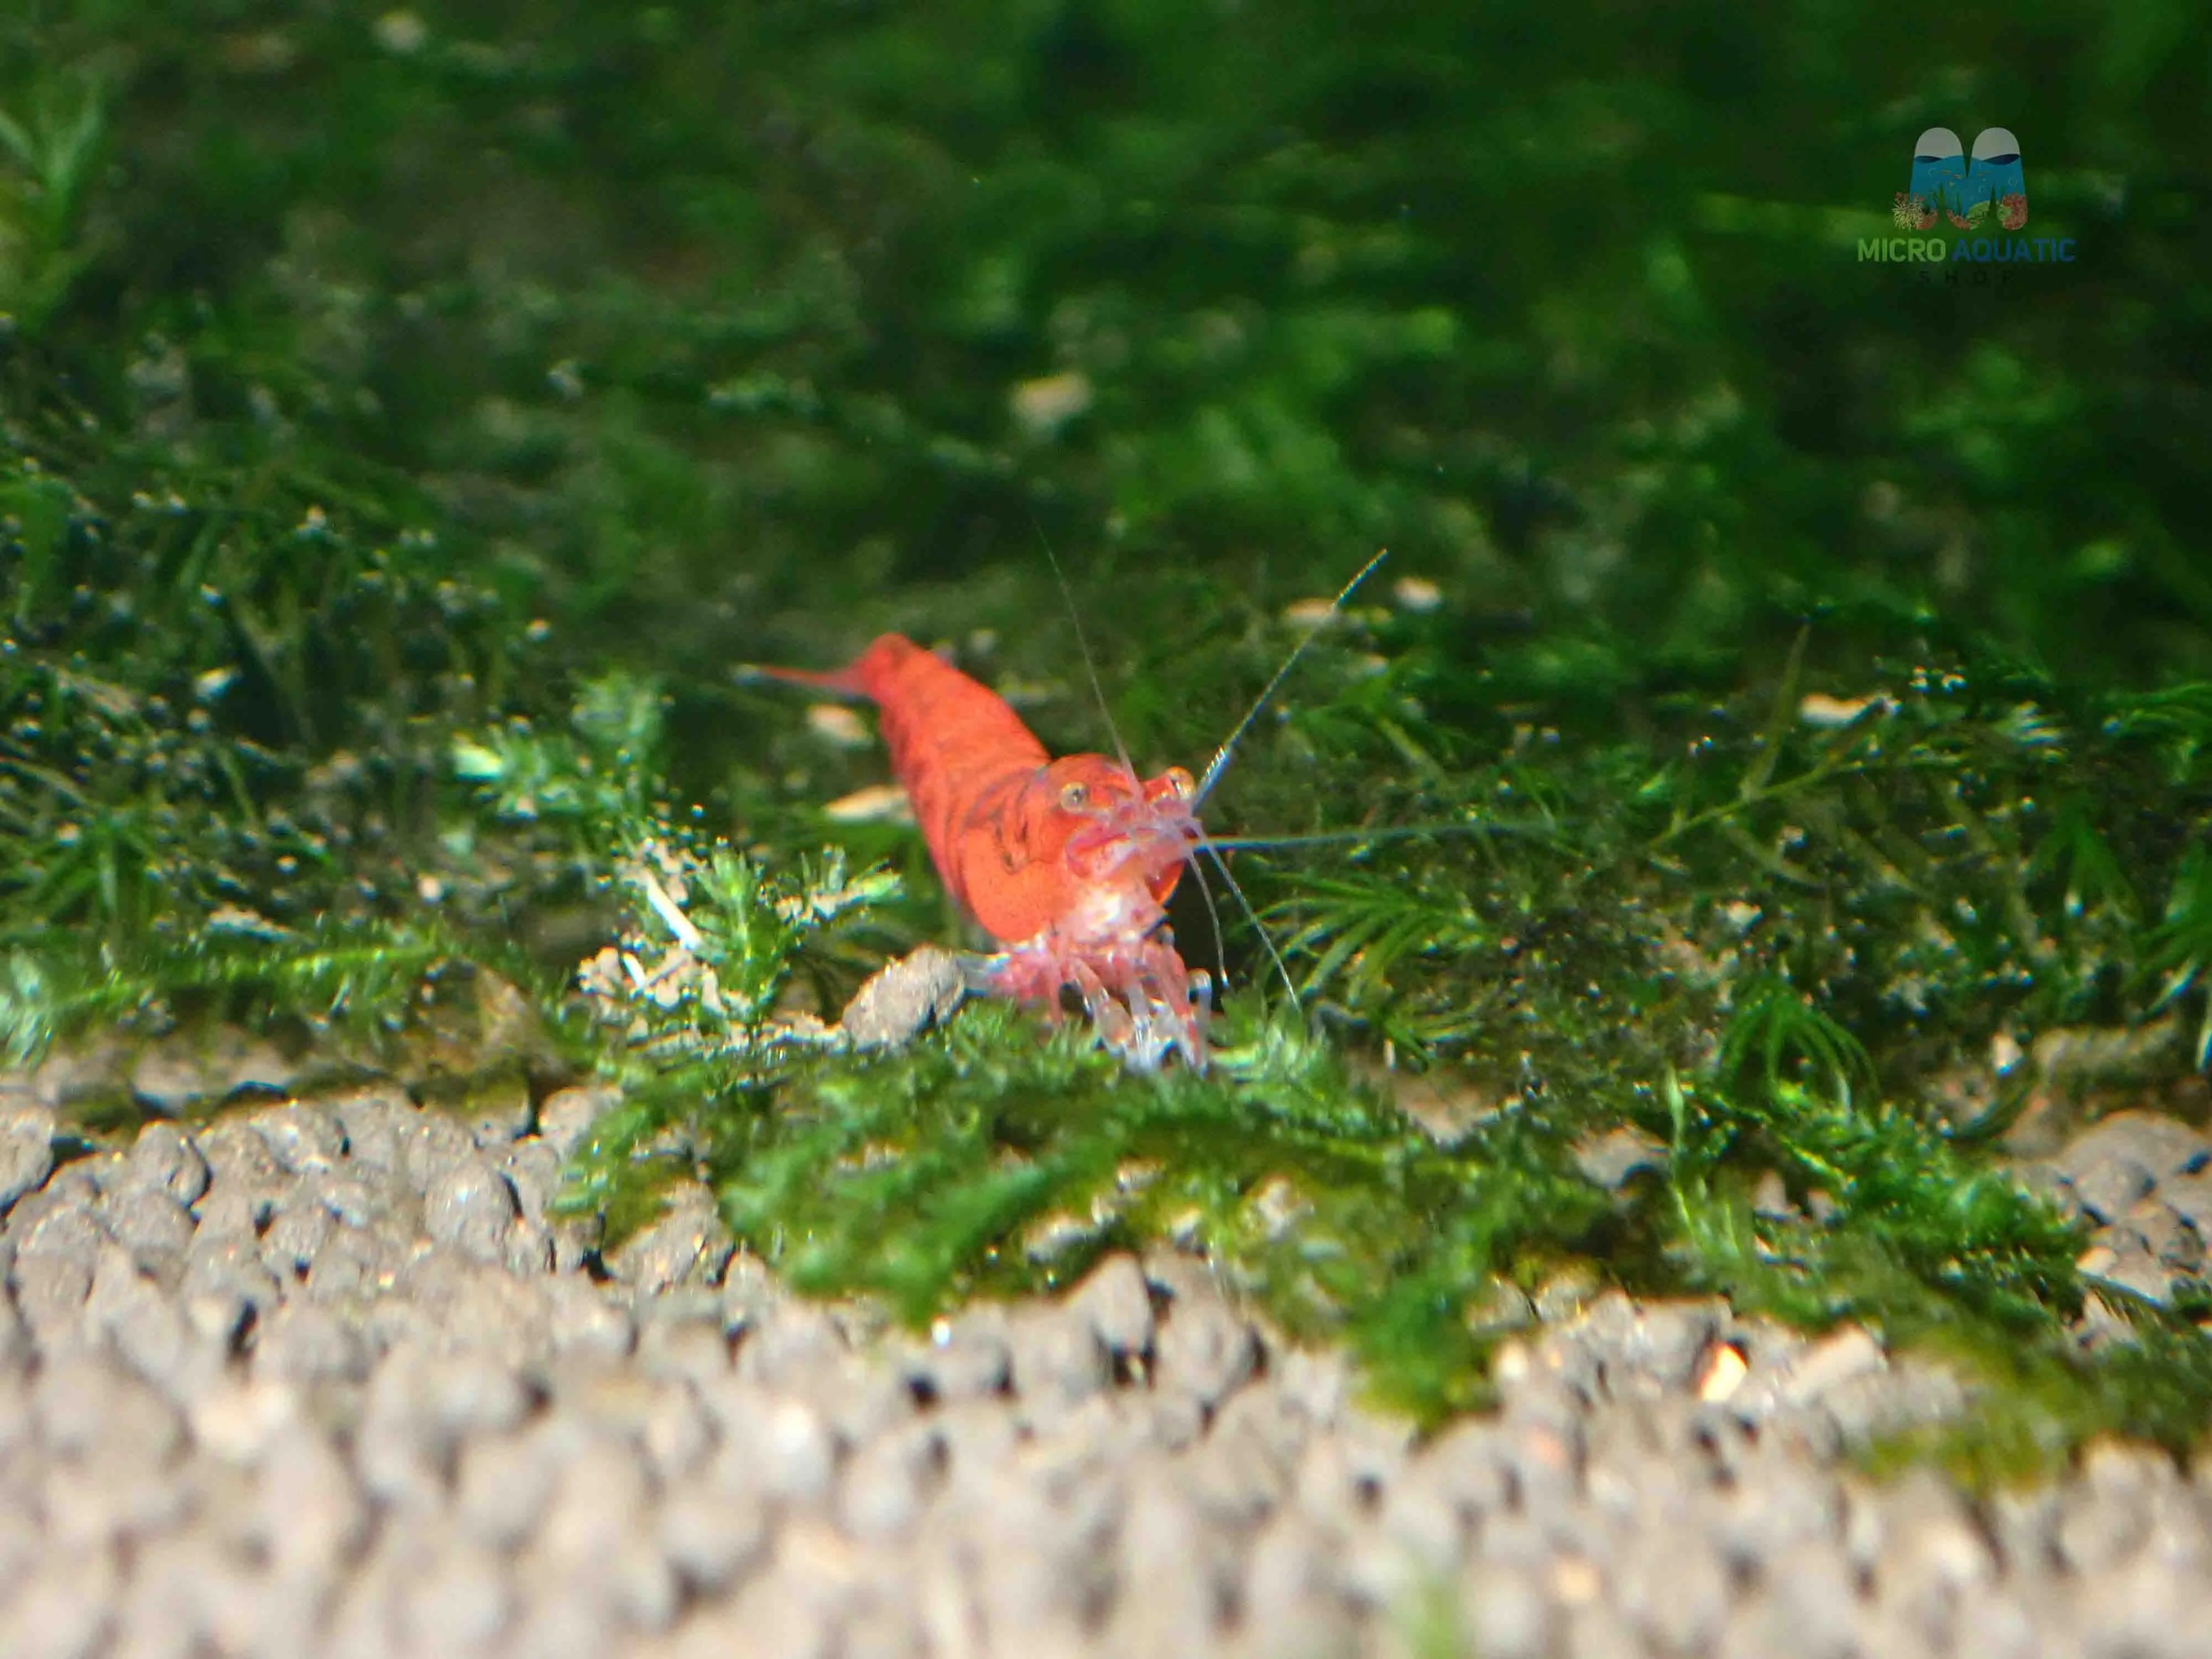 Red Extreme King Kong Shrimp